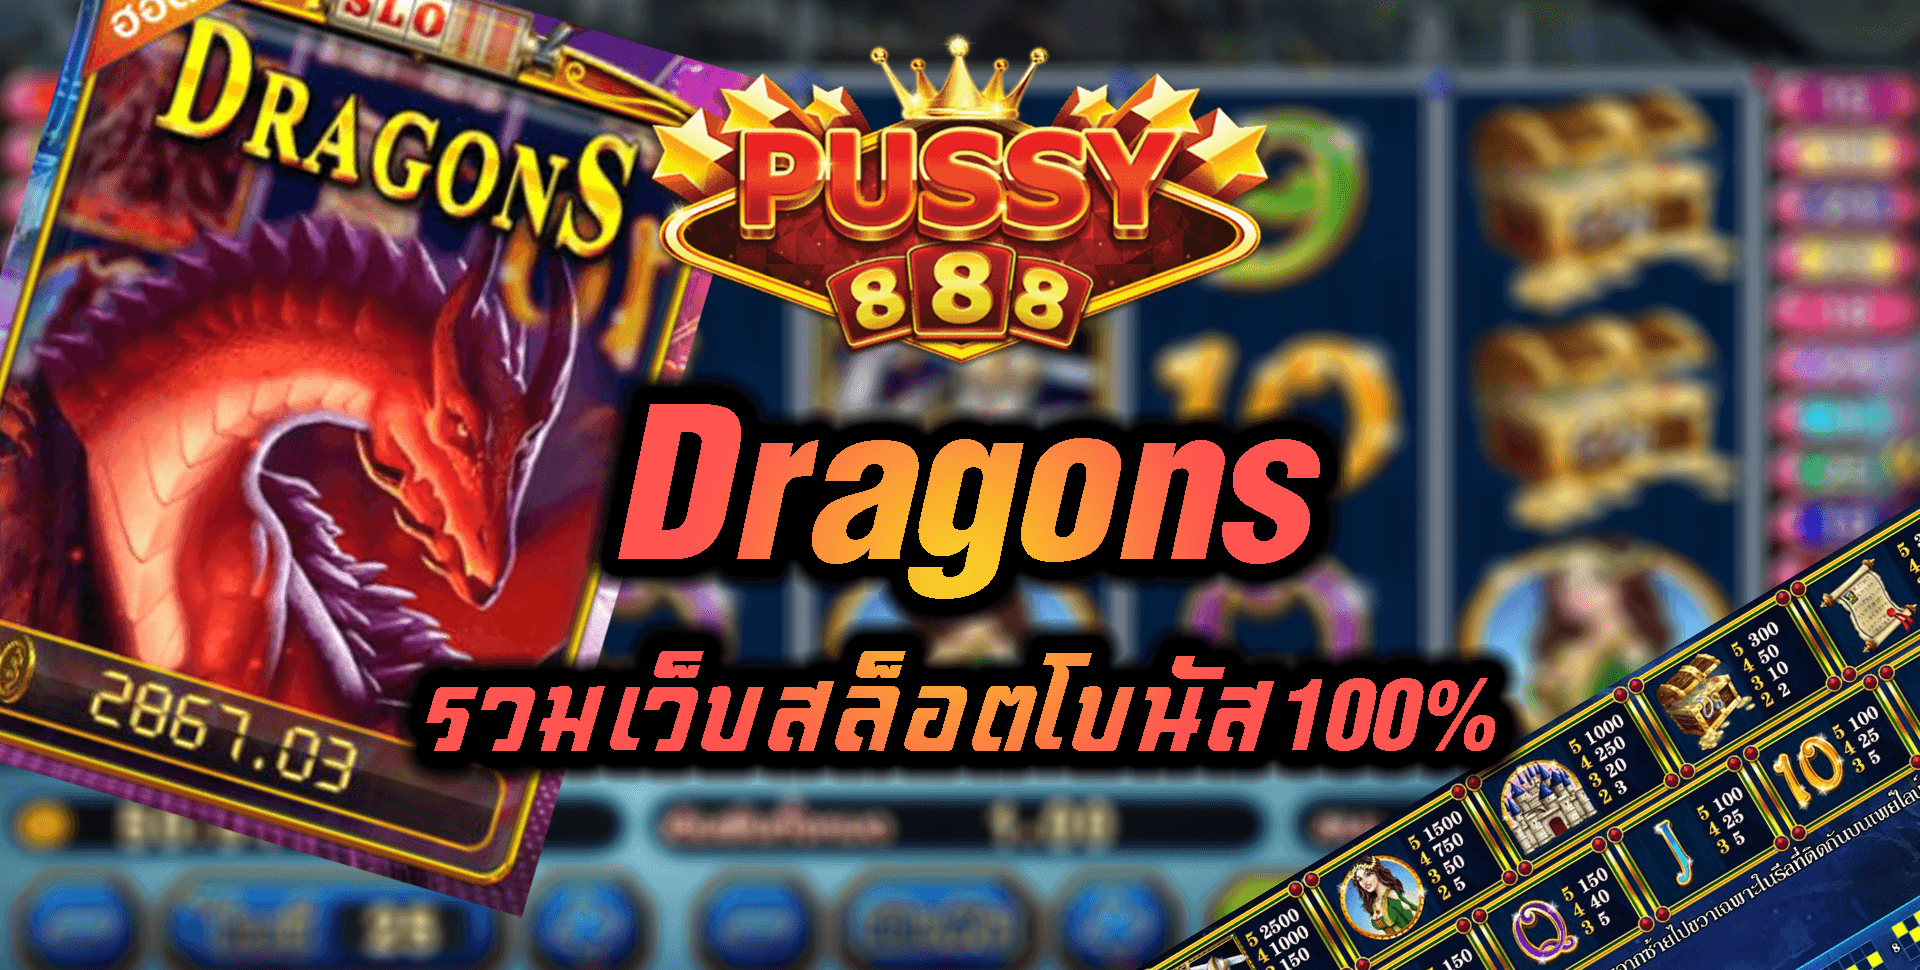 Pussy888-Dragons-5